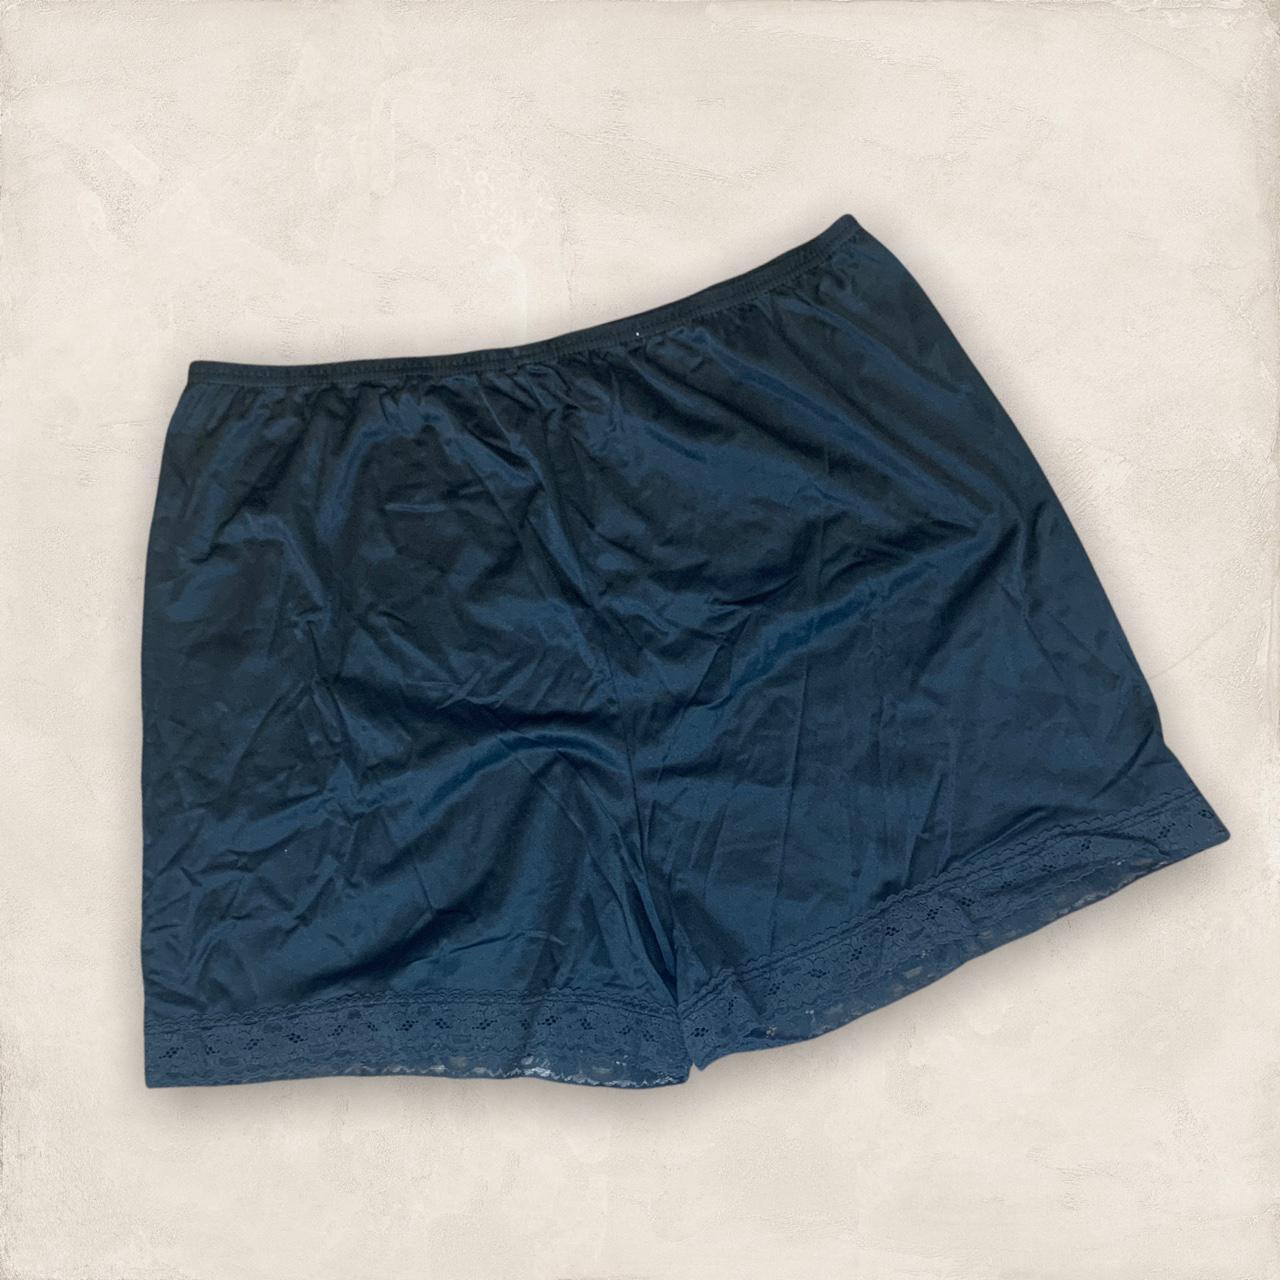 Product Image 1 - Black Bloomer Slip Shorts 
Measurements: